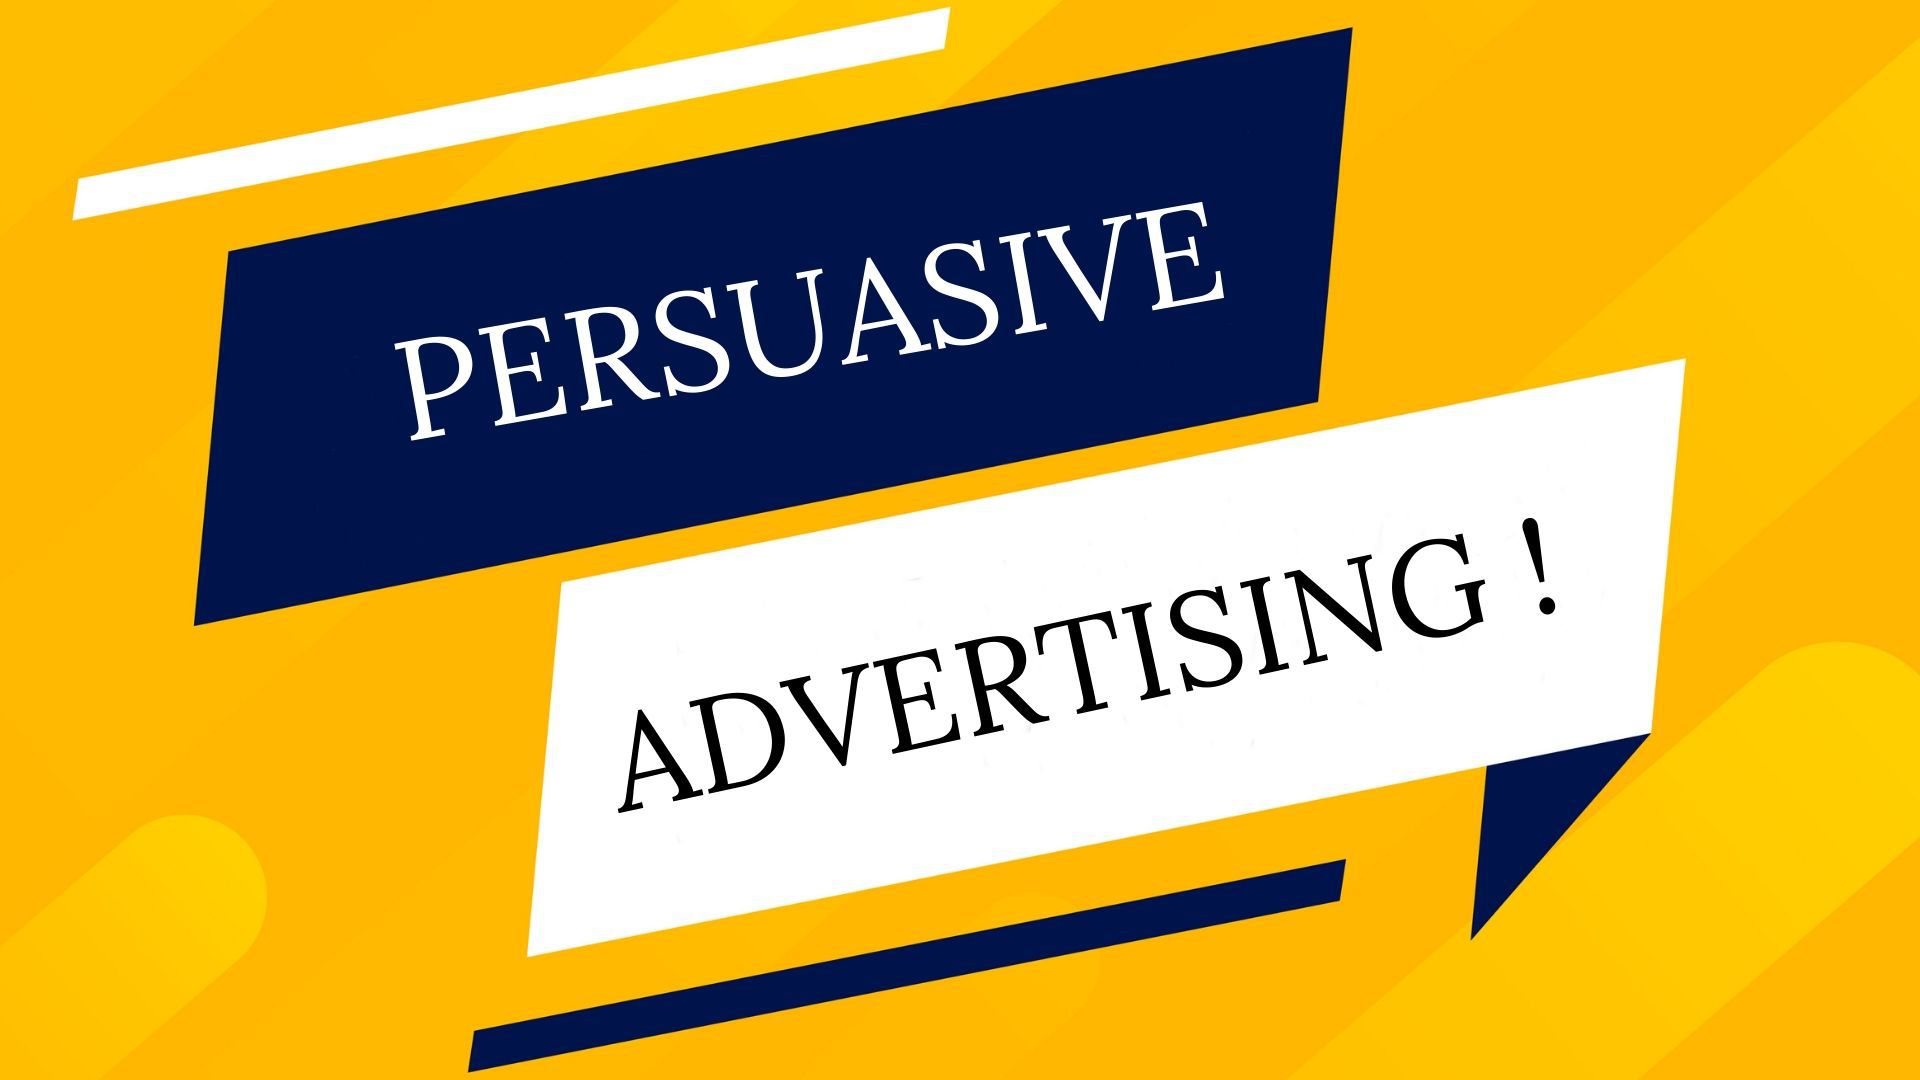 Advertising as Persuasion